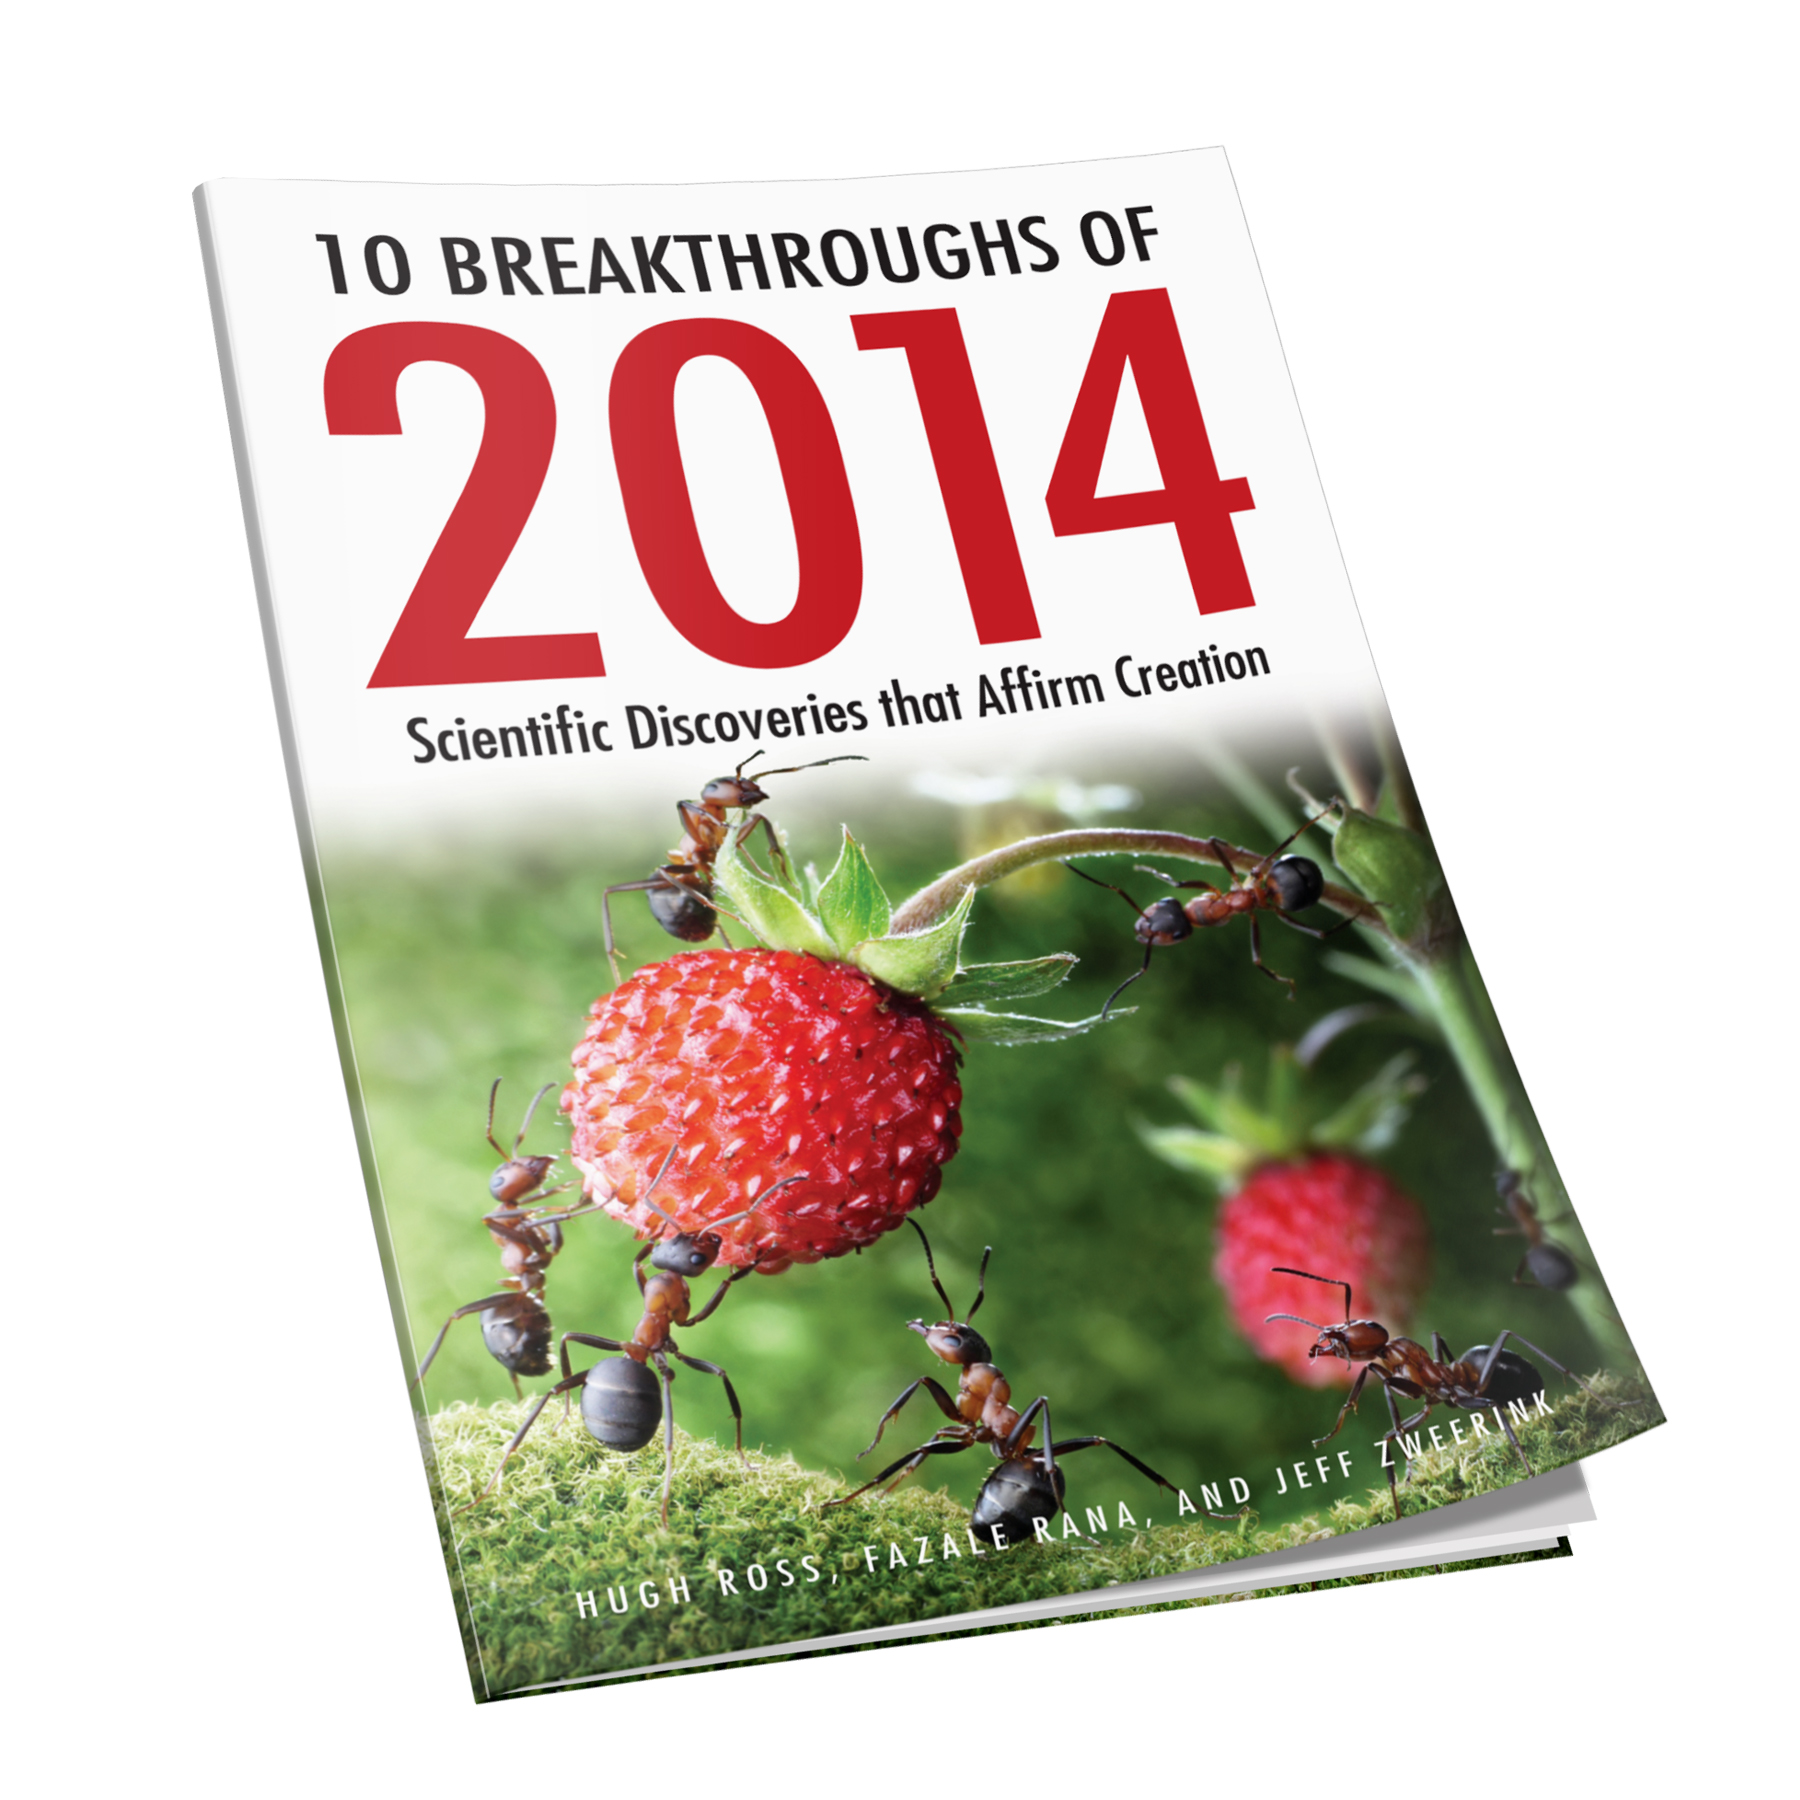 10 Breakthroughs of 2014 Image